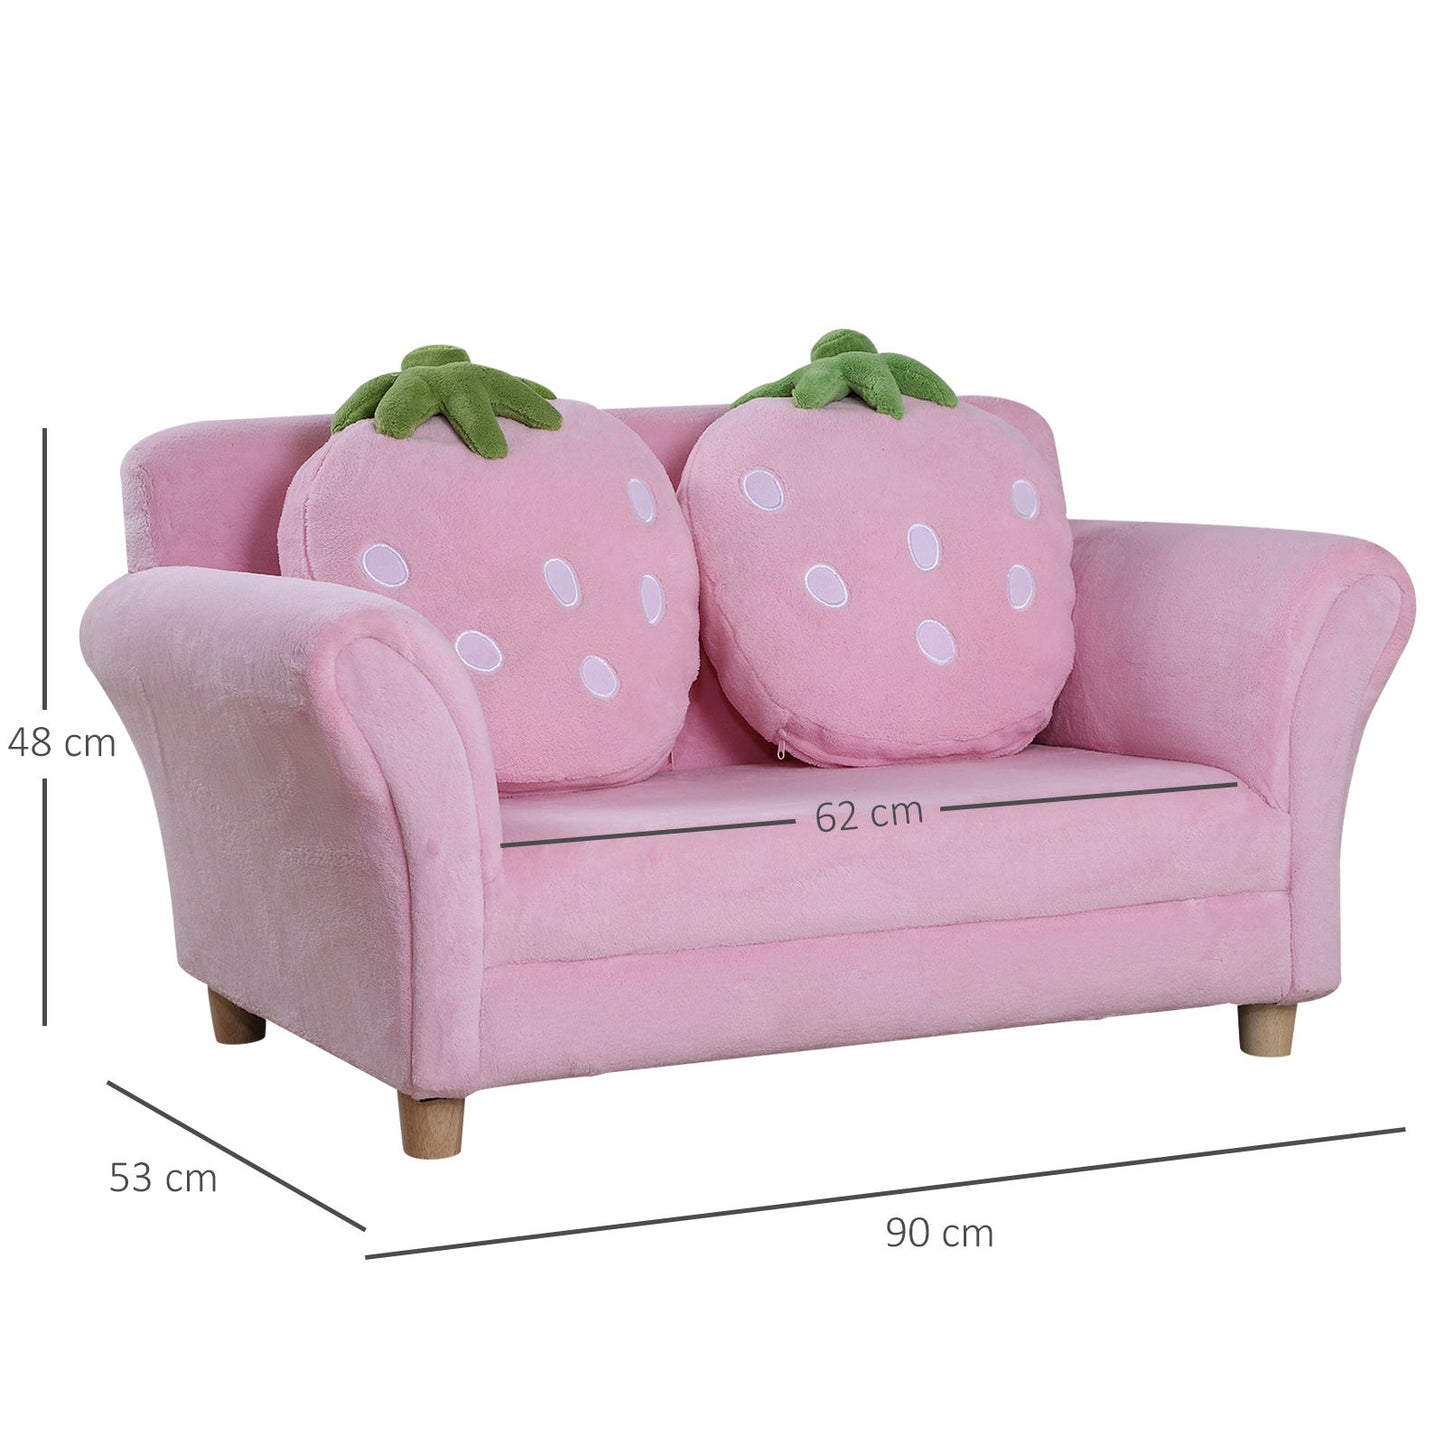 Nancy's Supers Children's sofa, Children's armchair, Sofa bed, High chair, Soft sofa (Strawberry sofa)